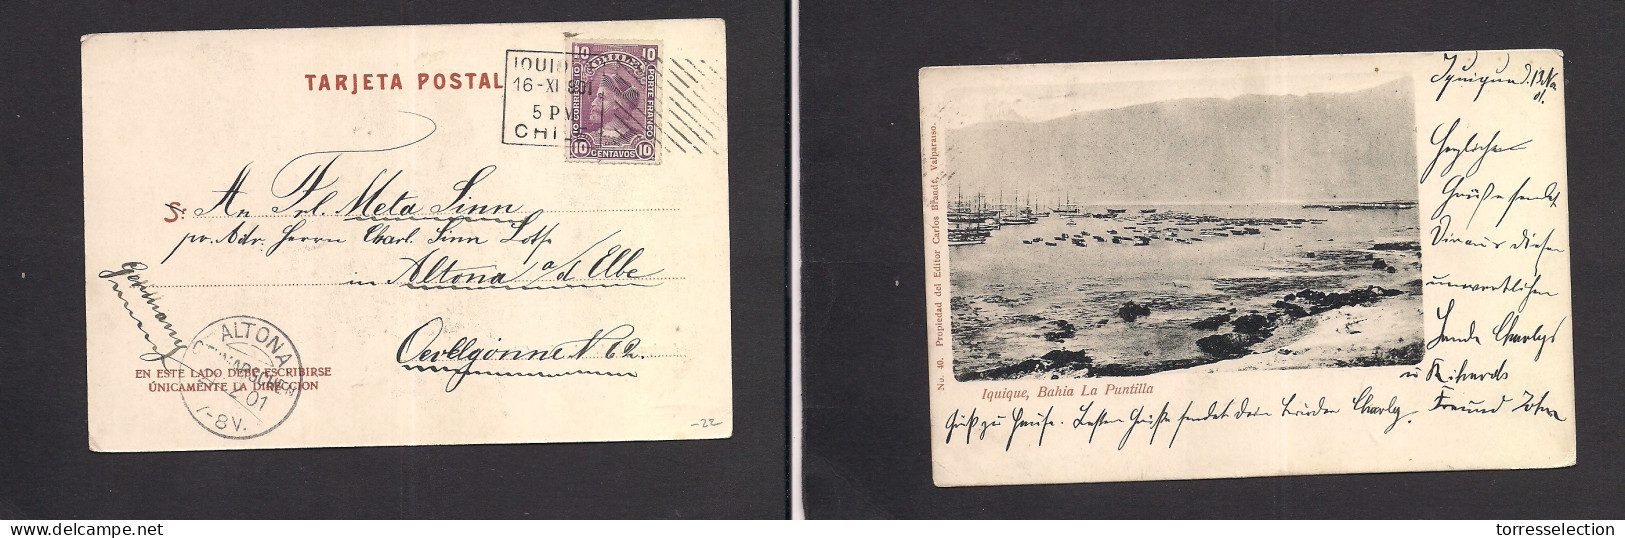 Chile - XX. 1901 (16 Nov) Iquique - Germany, Altona (21 Dec) Iquique Bahia Fkd Photo Ppc. Fine. - Chili